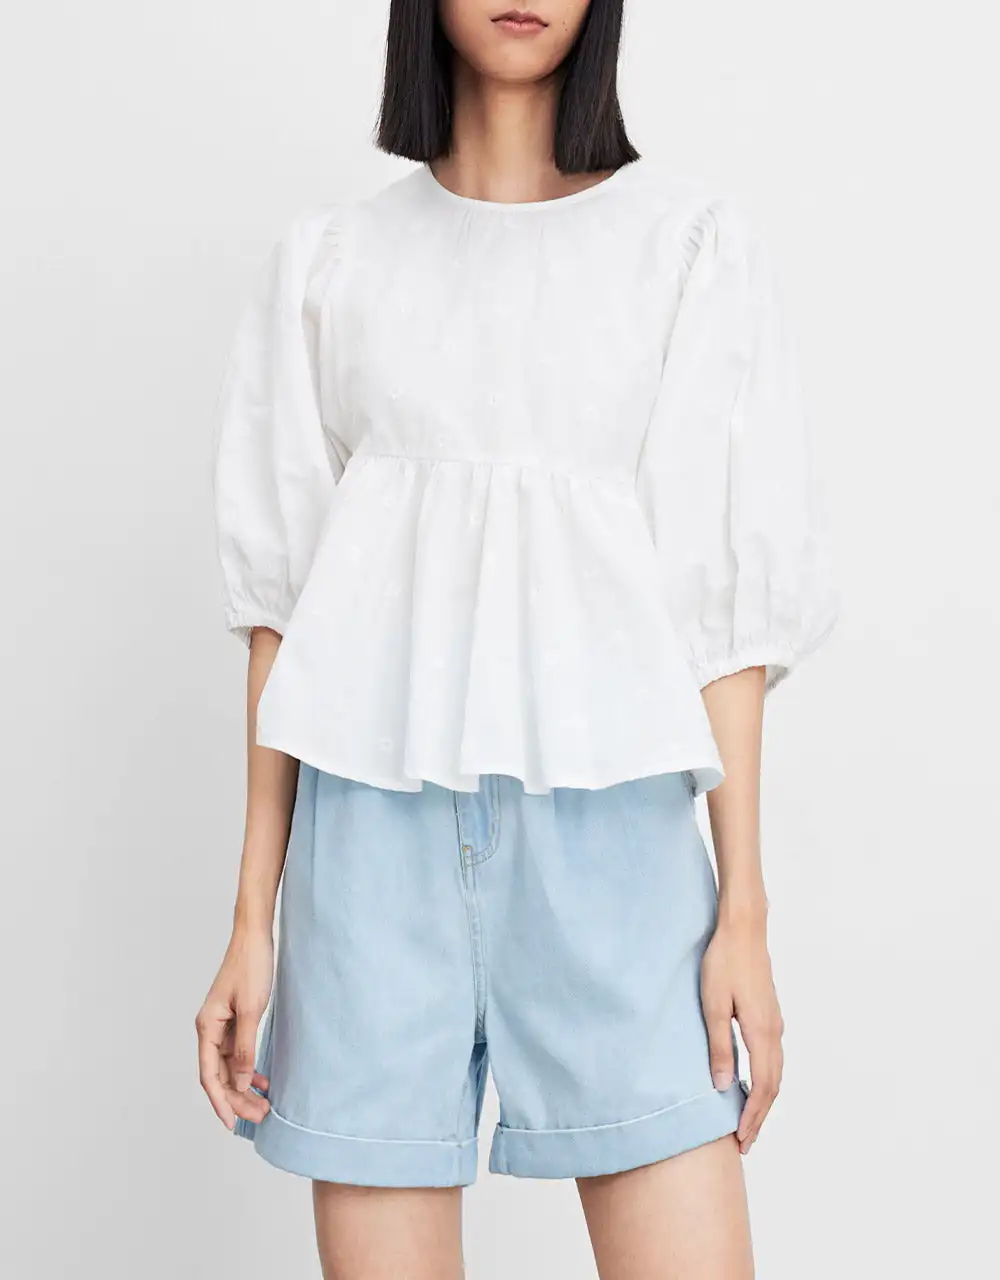 Urban Revivo Women Short Sleeve Ruffle Hem Blouses Round Neck Shirts Simple Solid Color Casual Loose Peplum Summer Tops